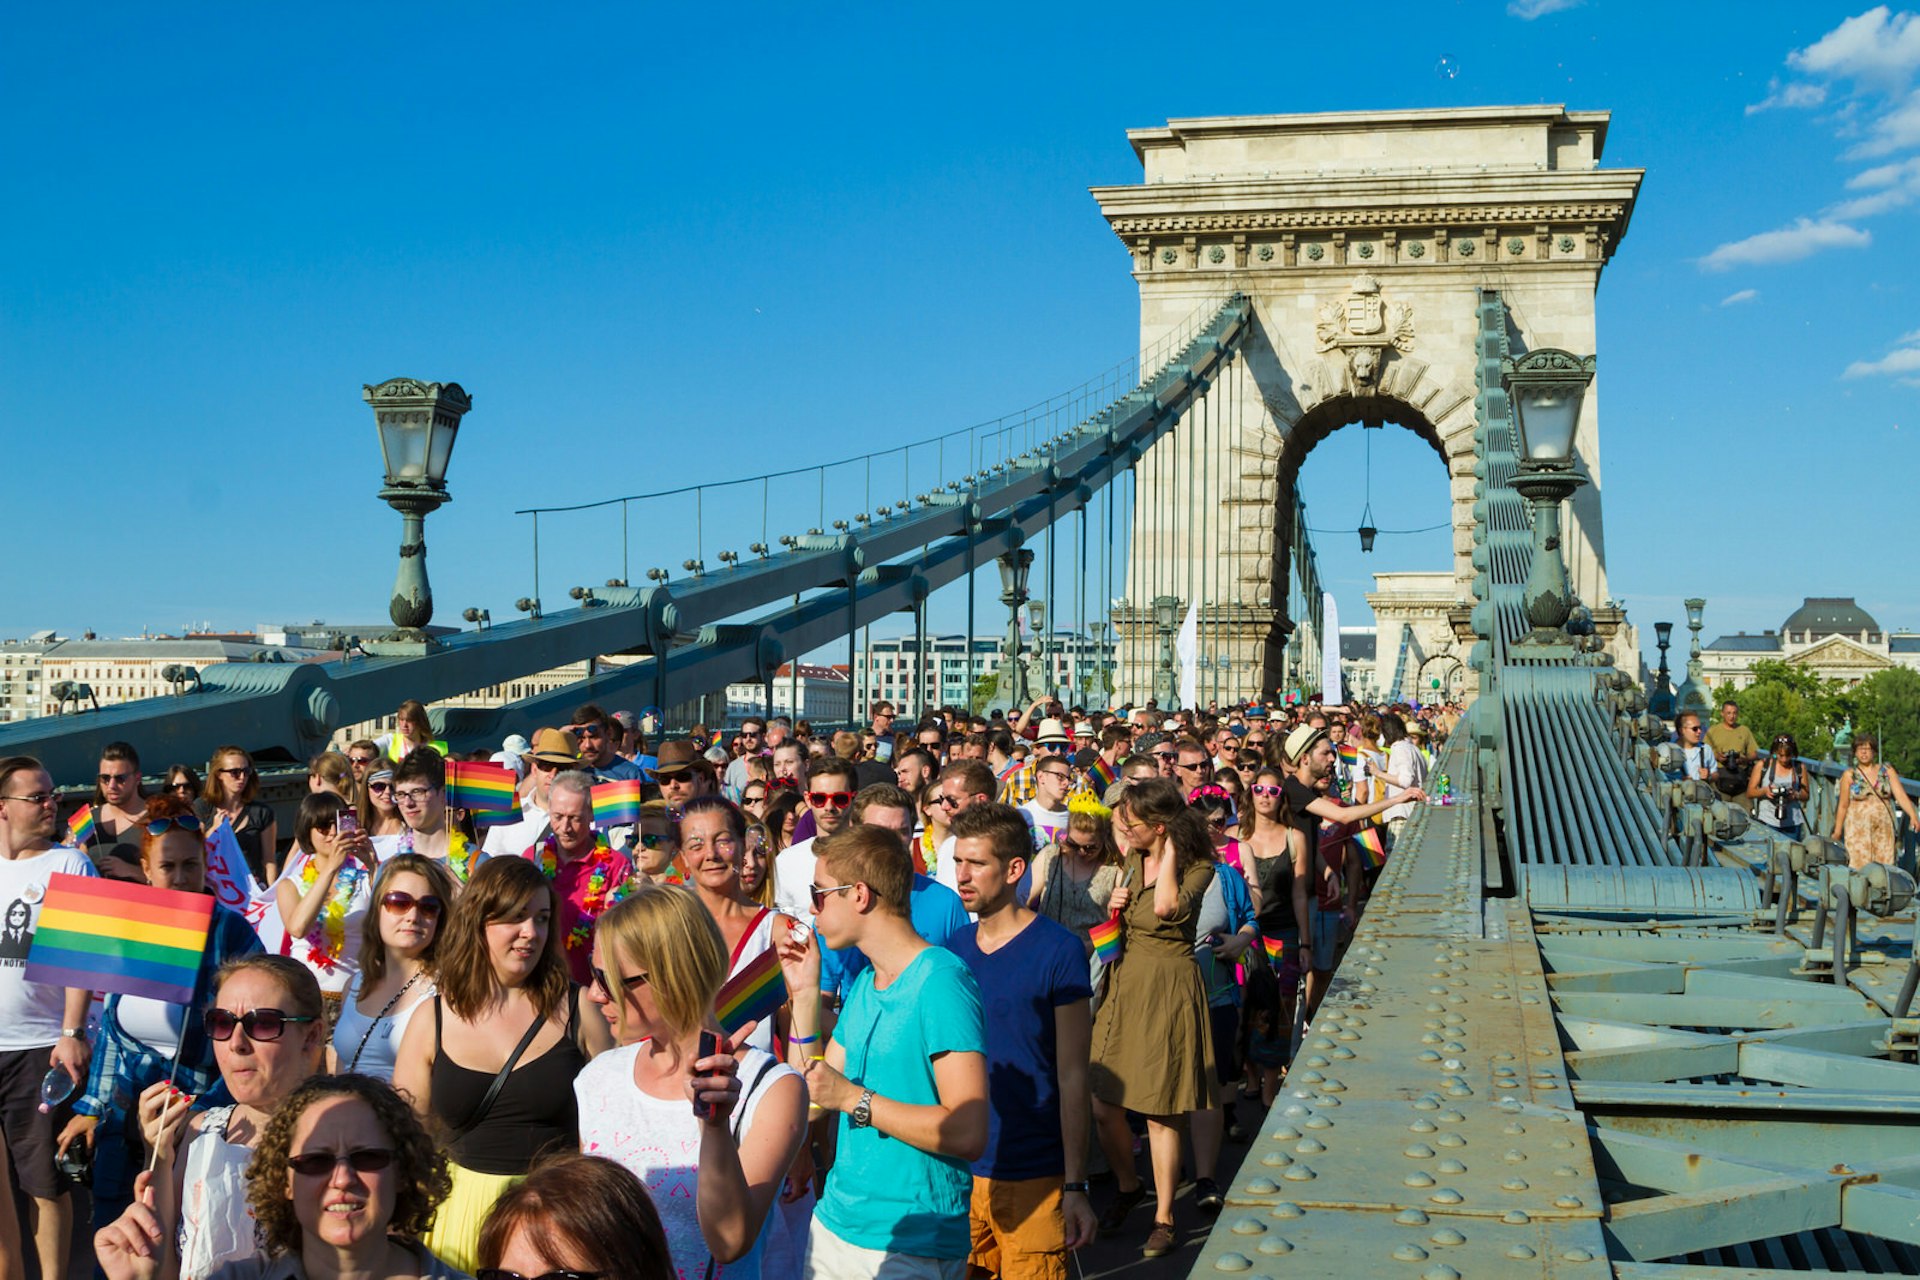 Pride in Europe: A crowd of Pride-goers on a bridge under blue skies in Budapest © conejota / Shutterstock